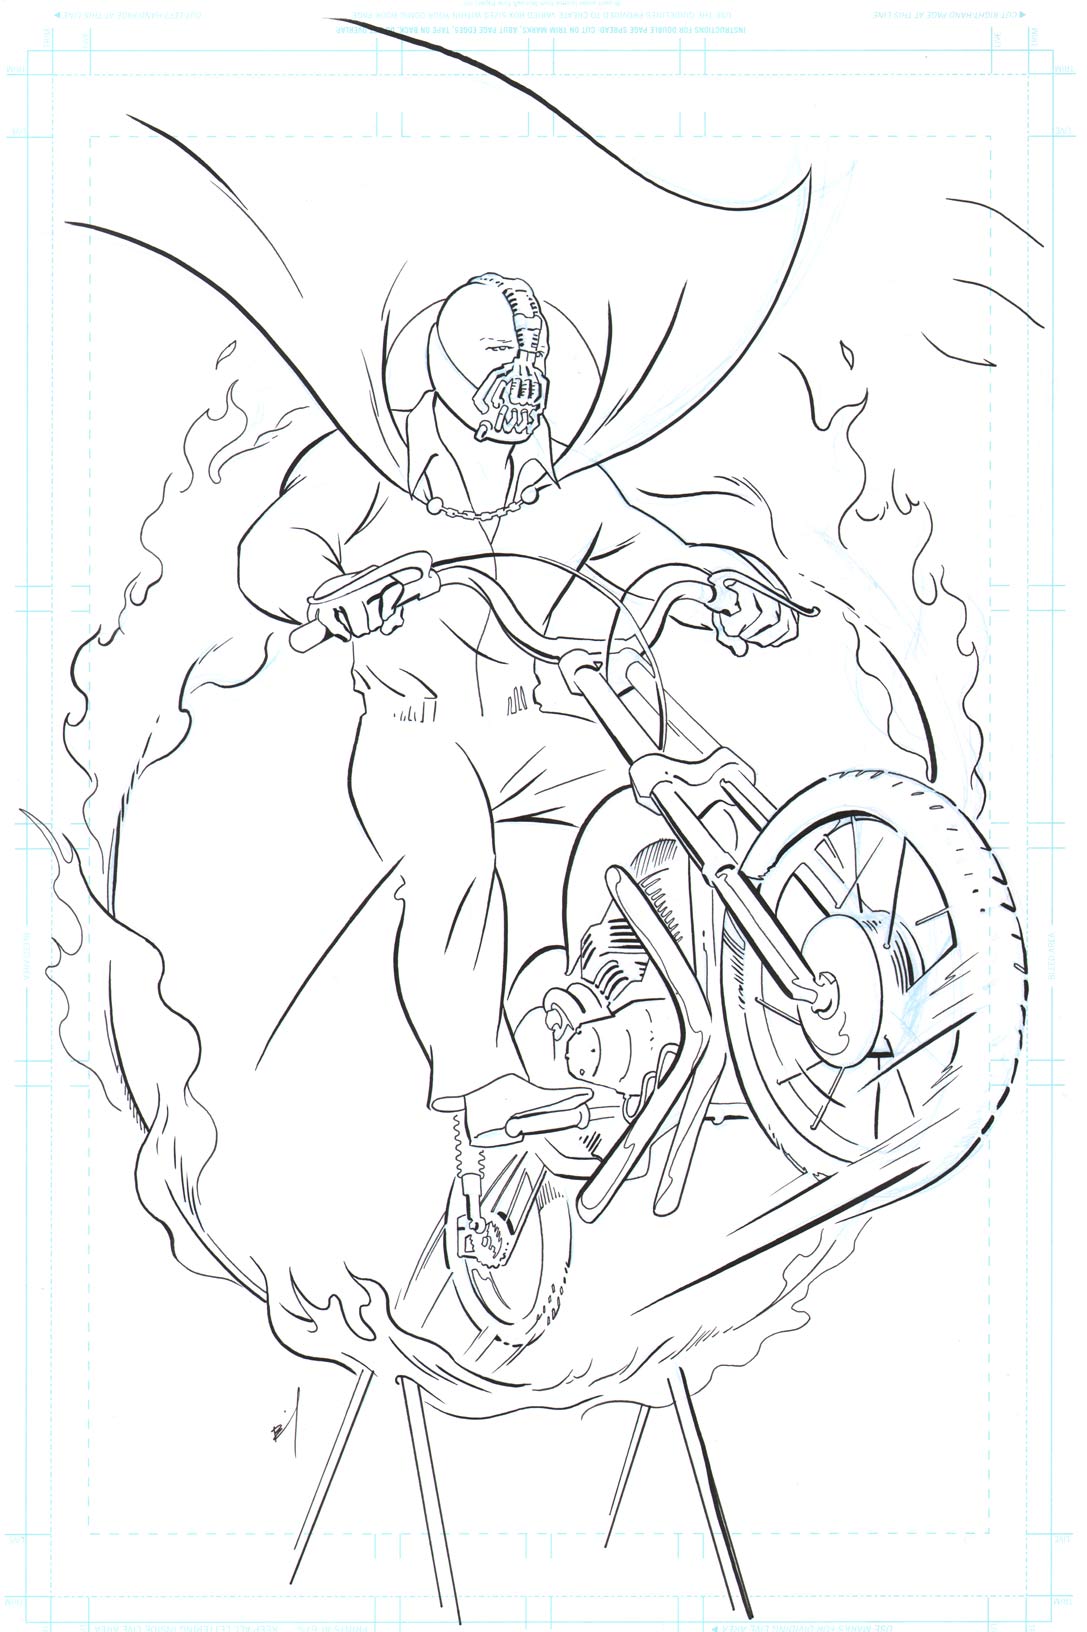 Bane jumping through a flaming hoop on a motorcycle original ink drawing